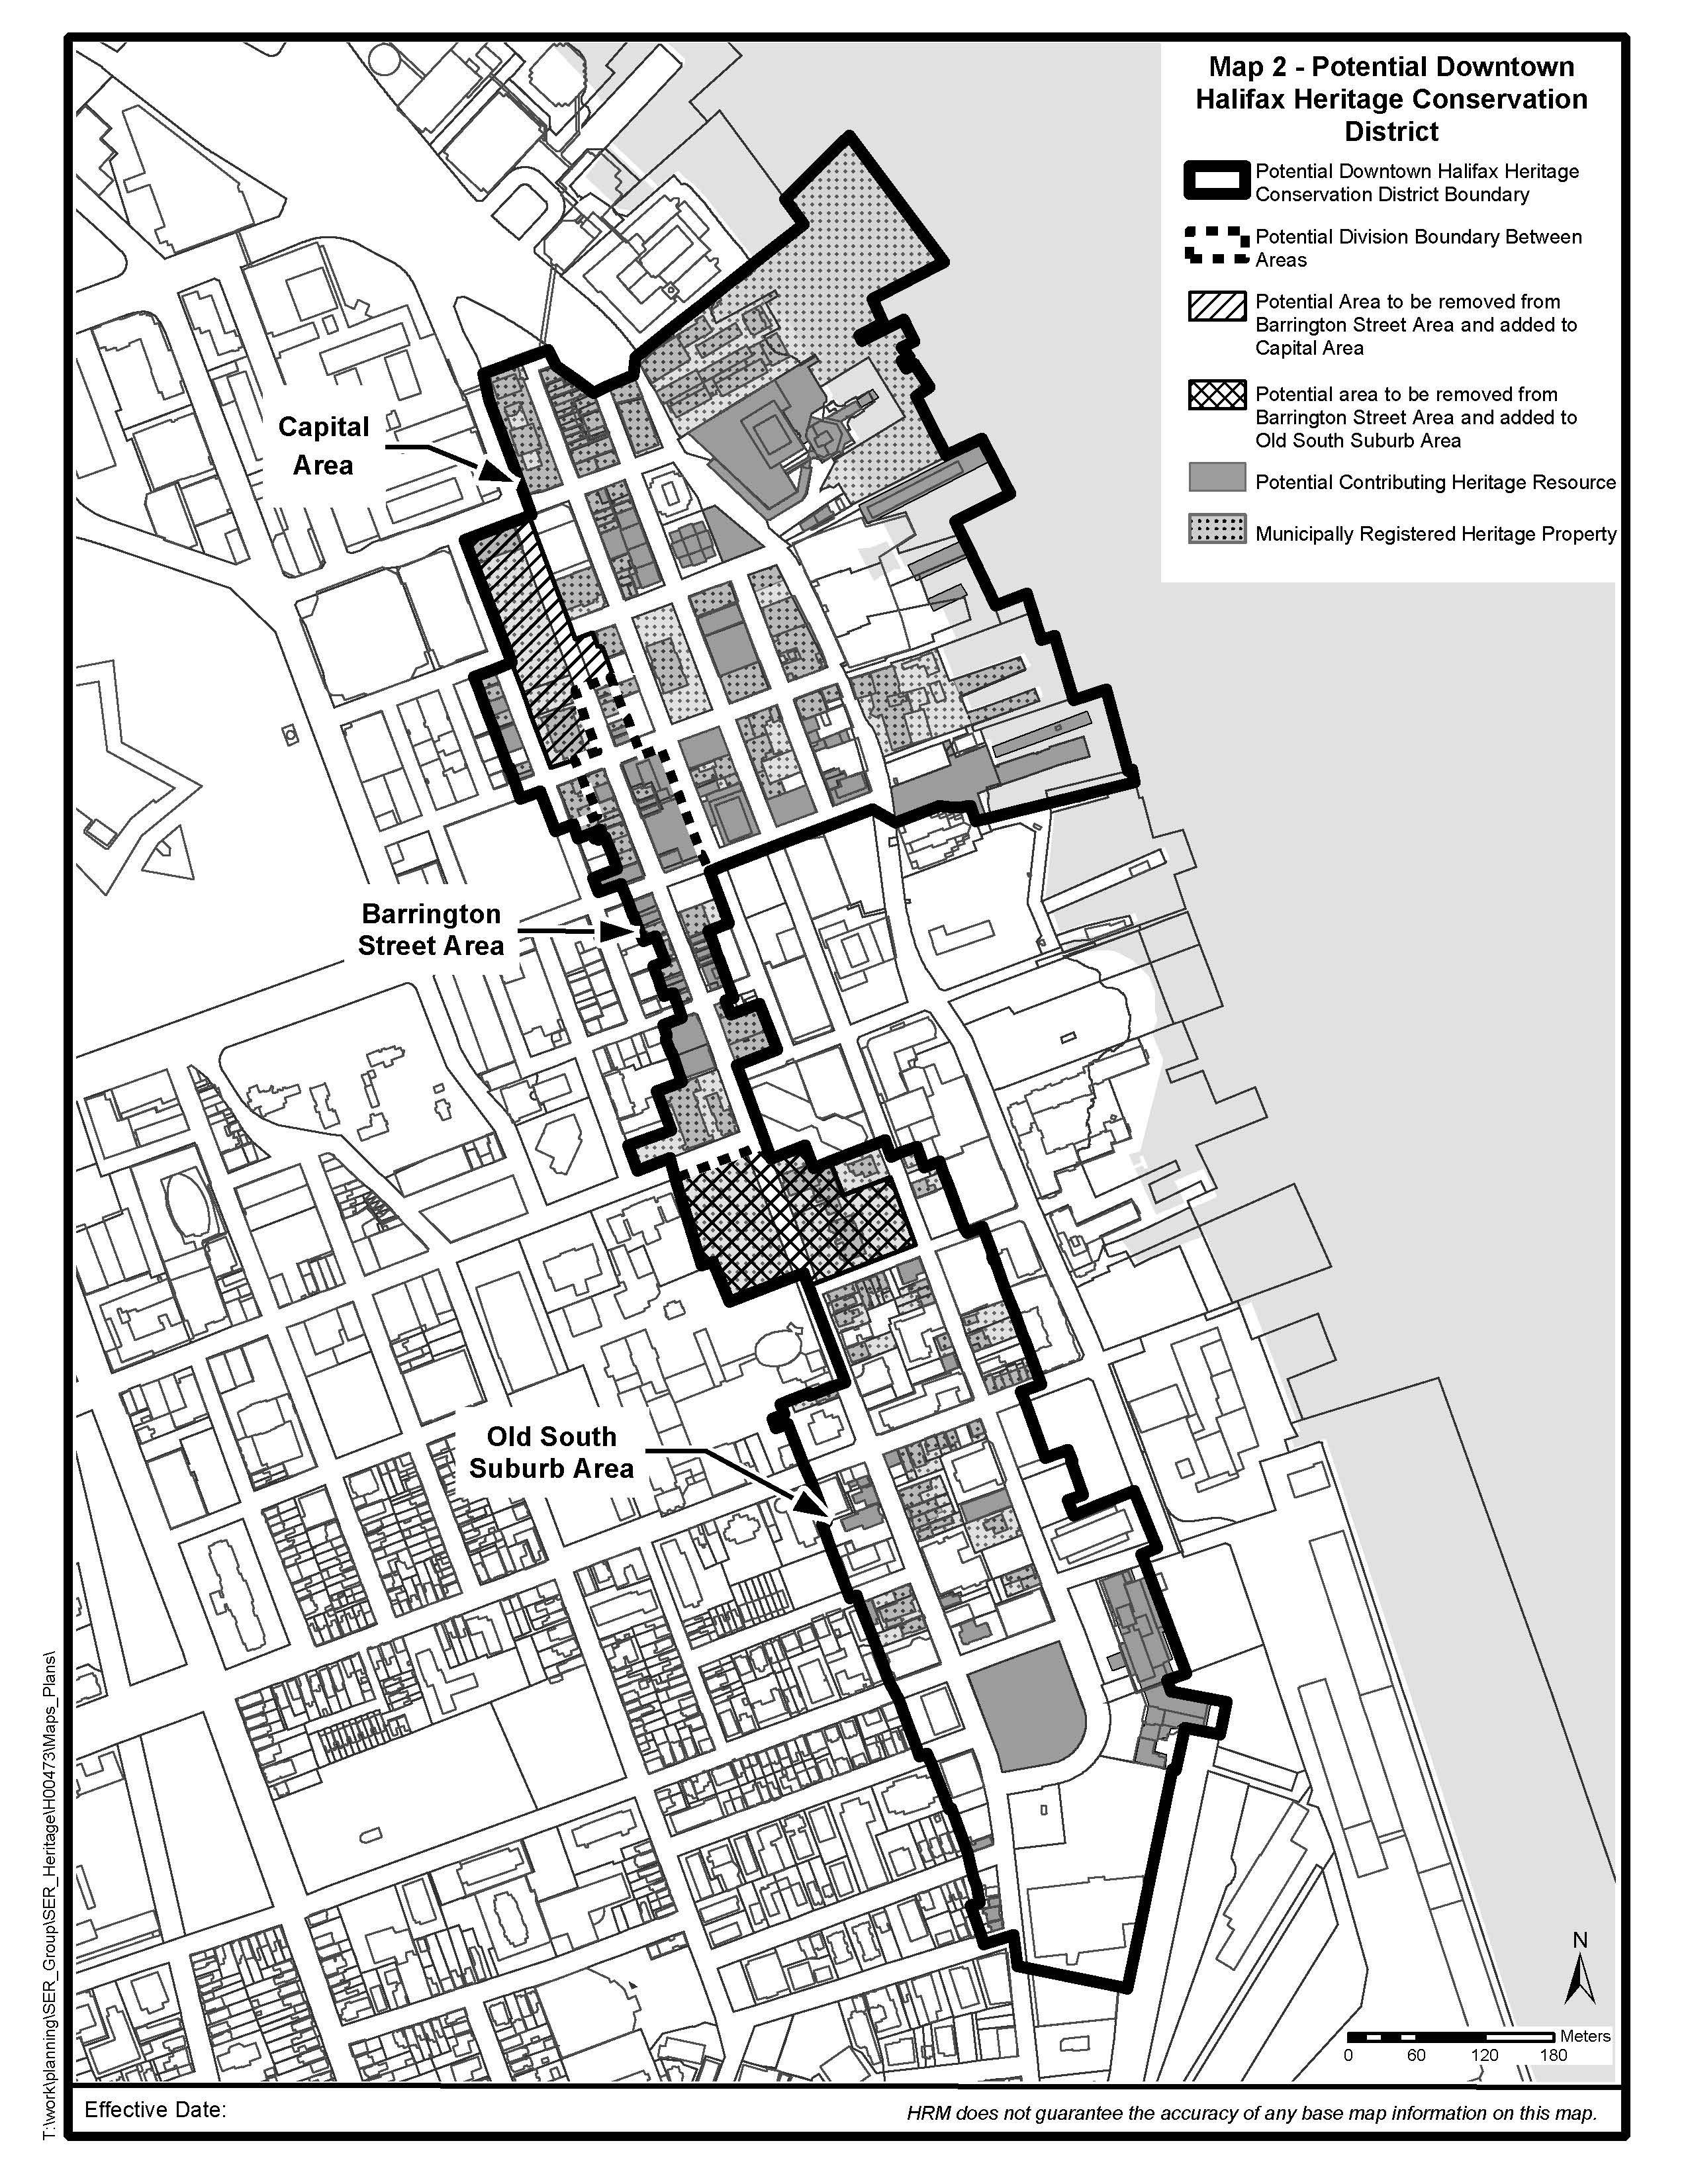 Proposed Downtown Halifax HCD.jpg